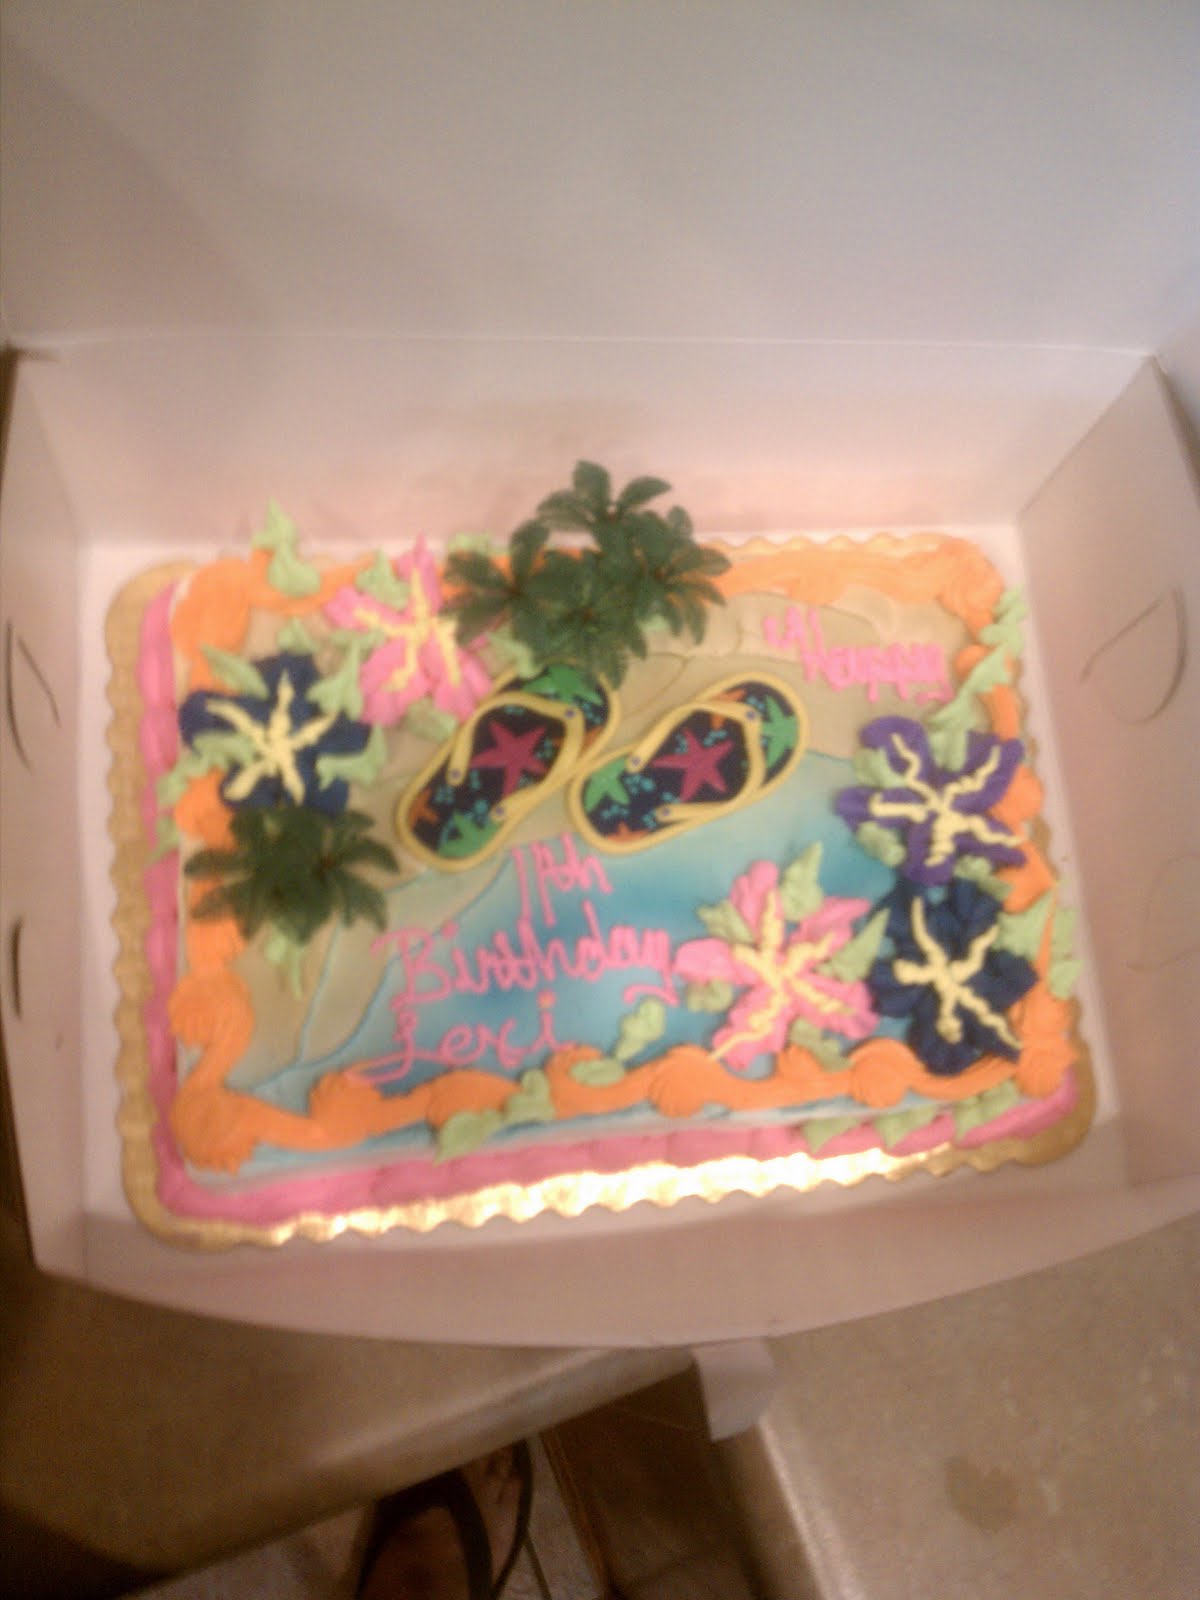 Albertsons Birthday Cakes